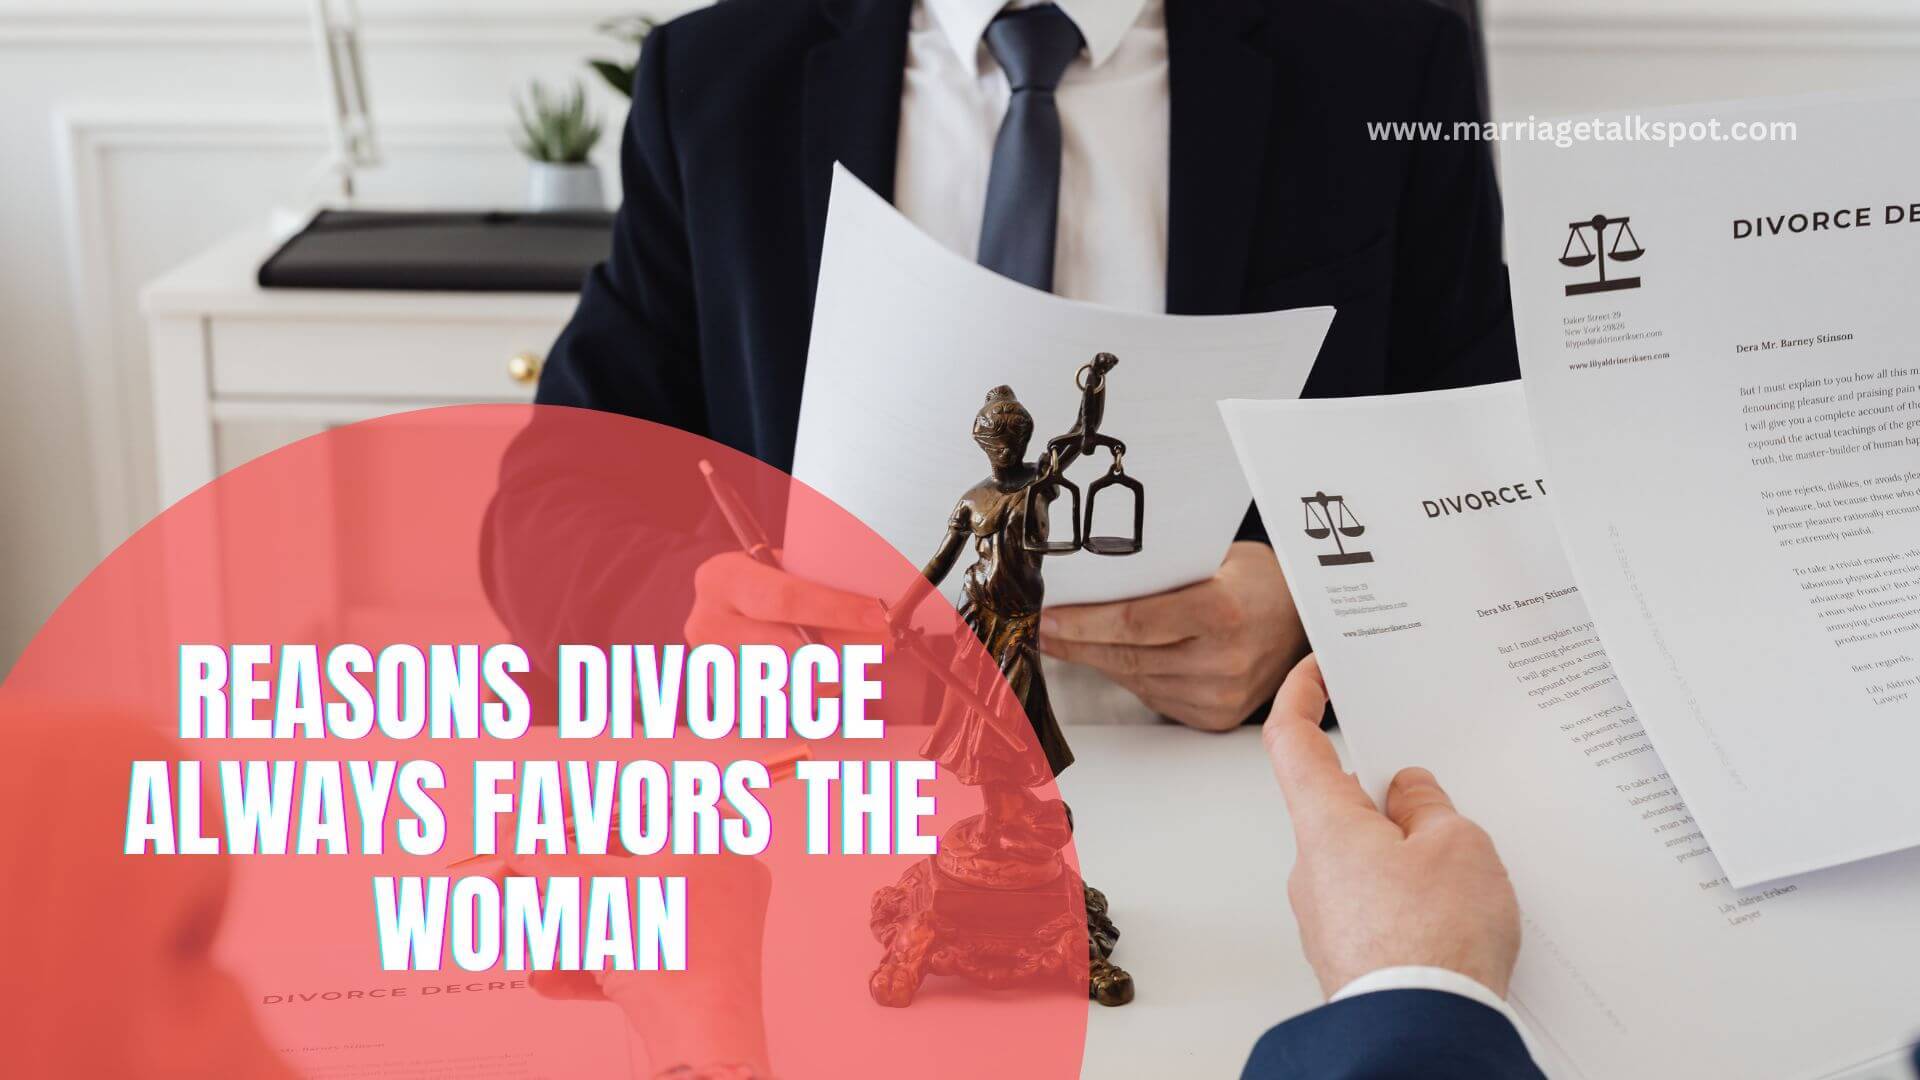 Divorce always favors the woman